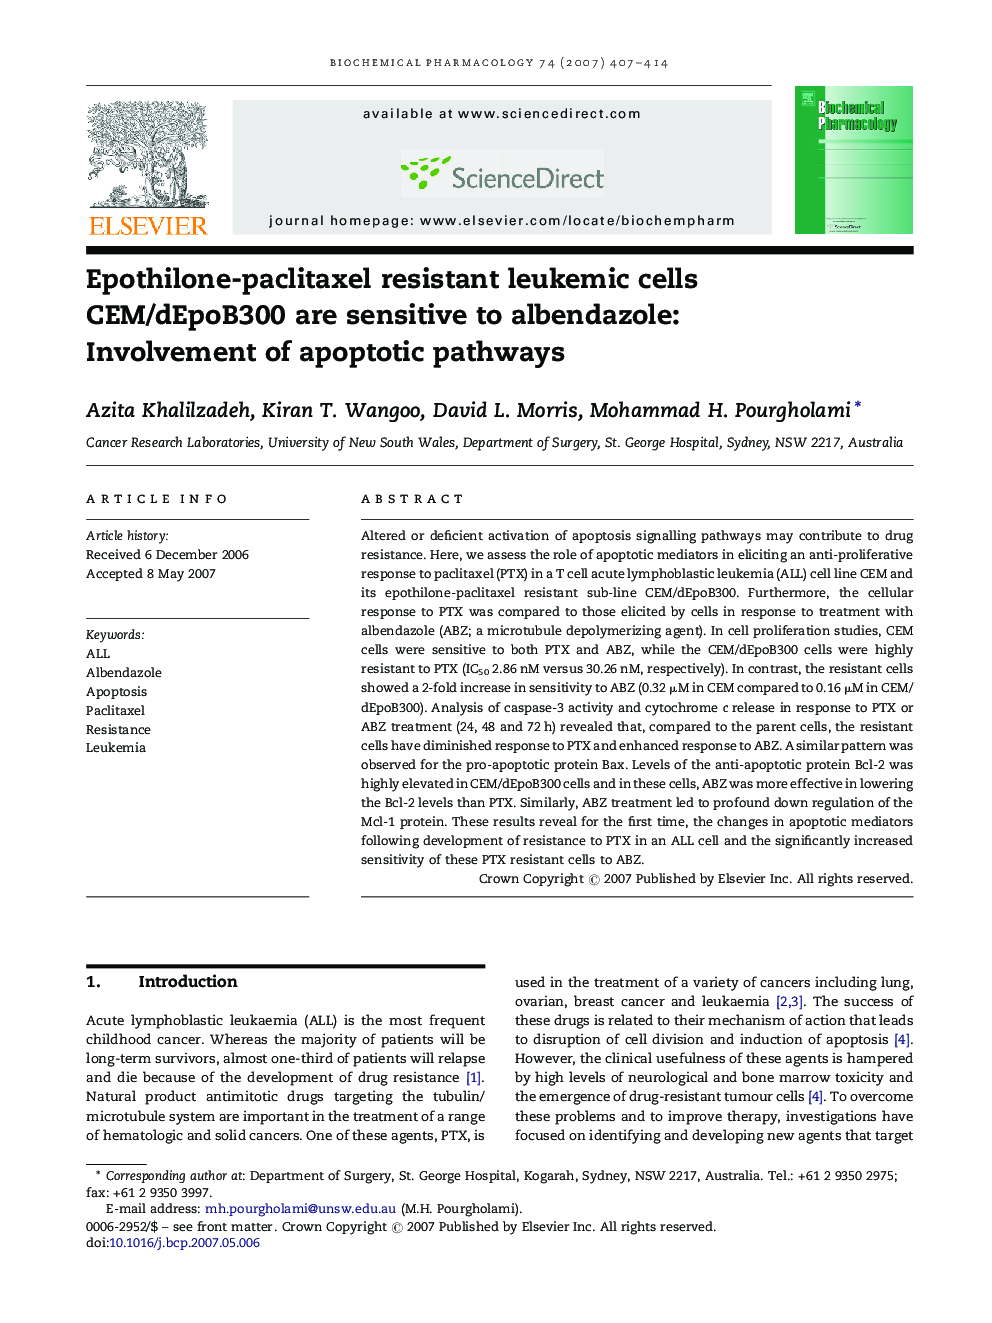 Epothilone-paclitaxel resistant leukemic cells CEM/dEpoB300 are sensitive to albendazole: Involvement of apoptotic pathways